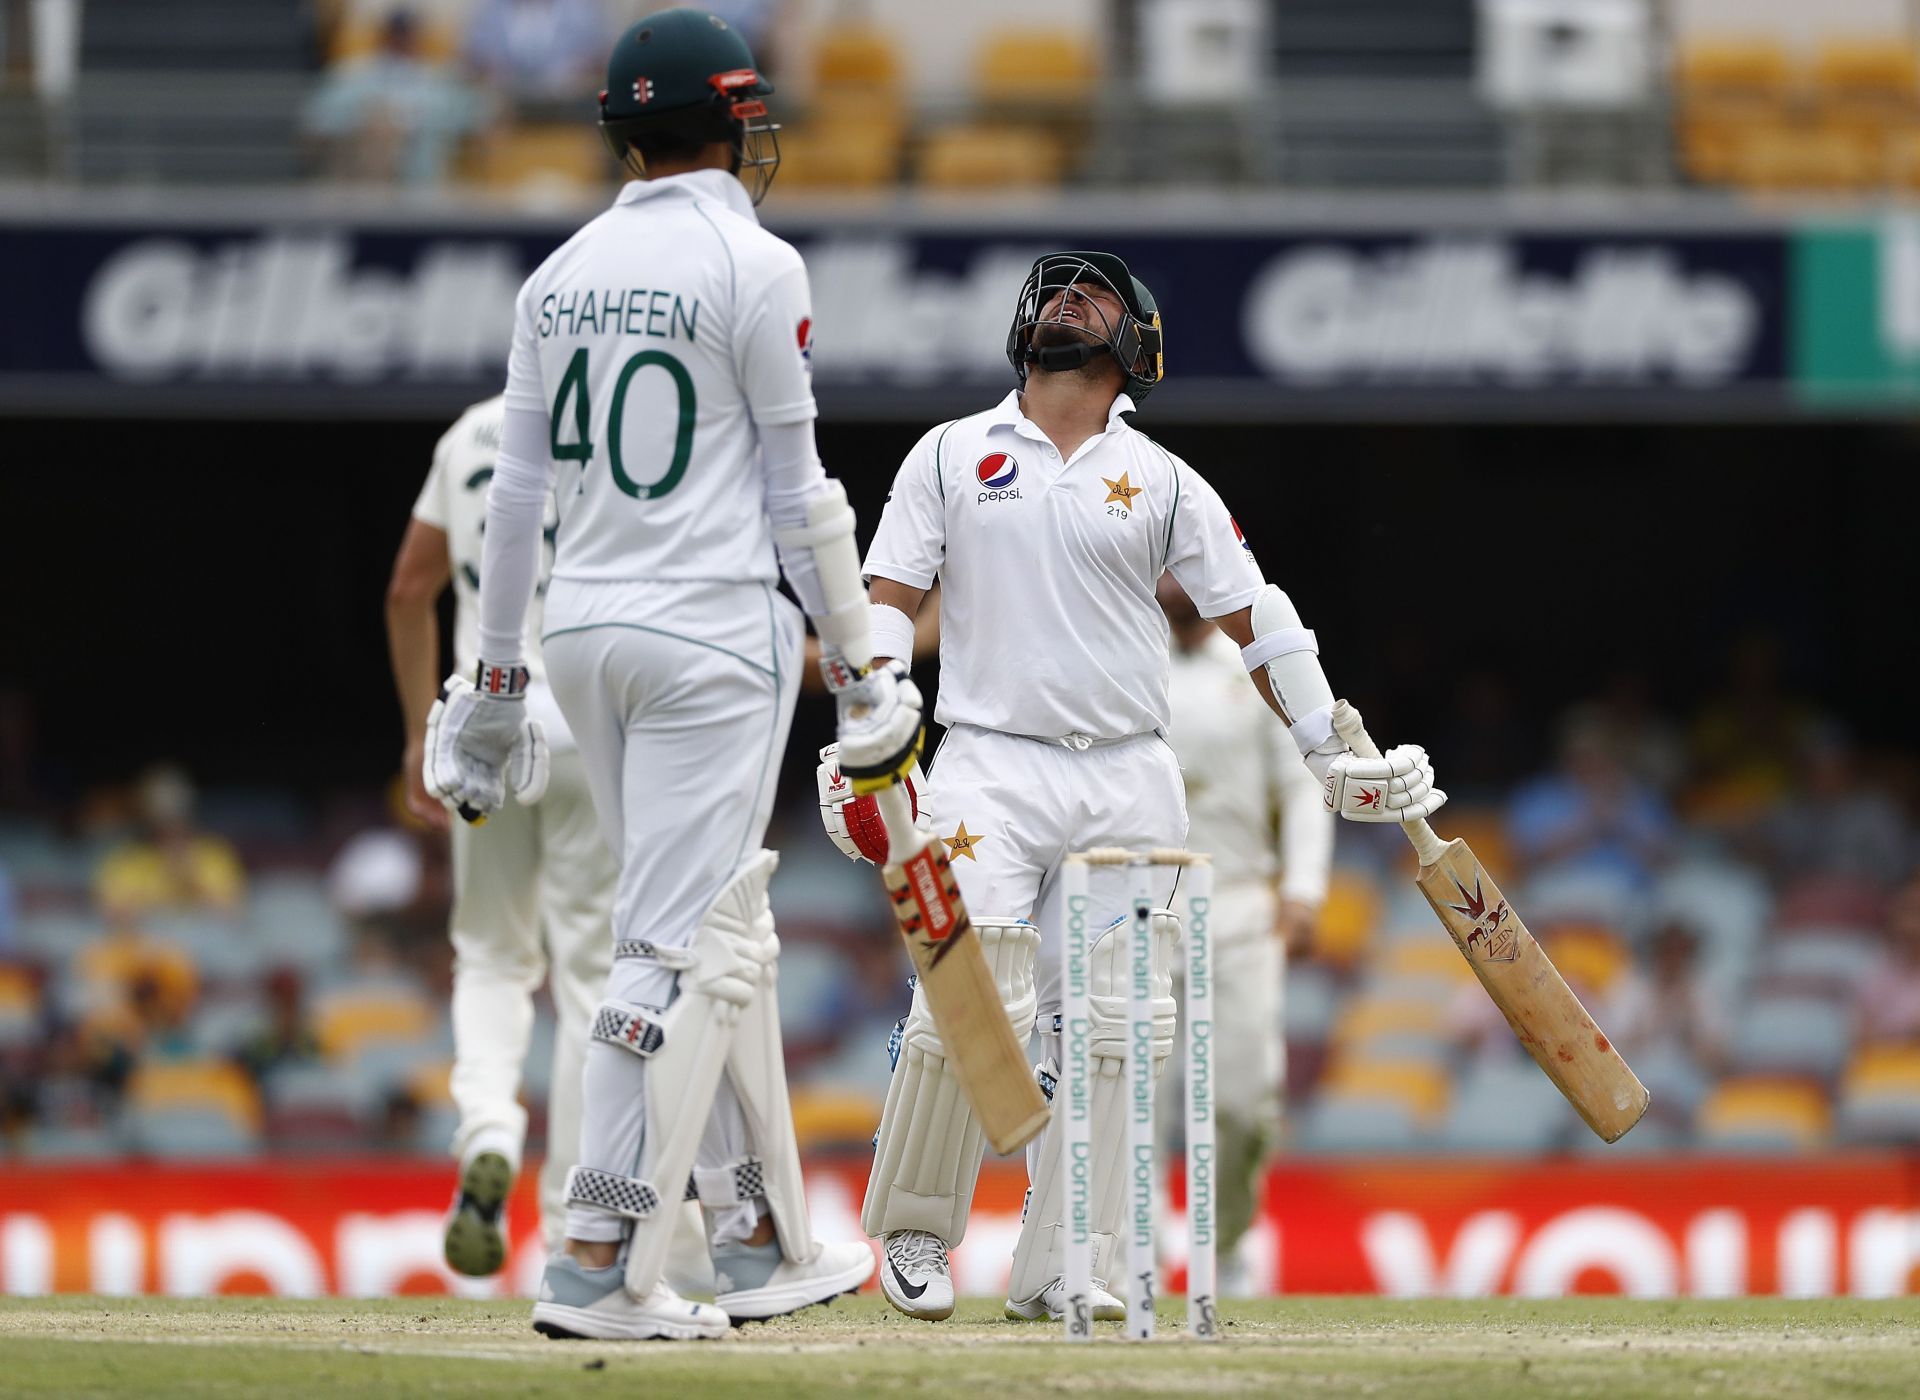 Pakistan has had torrid time in Australia